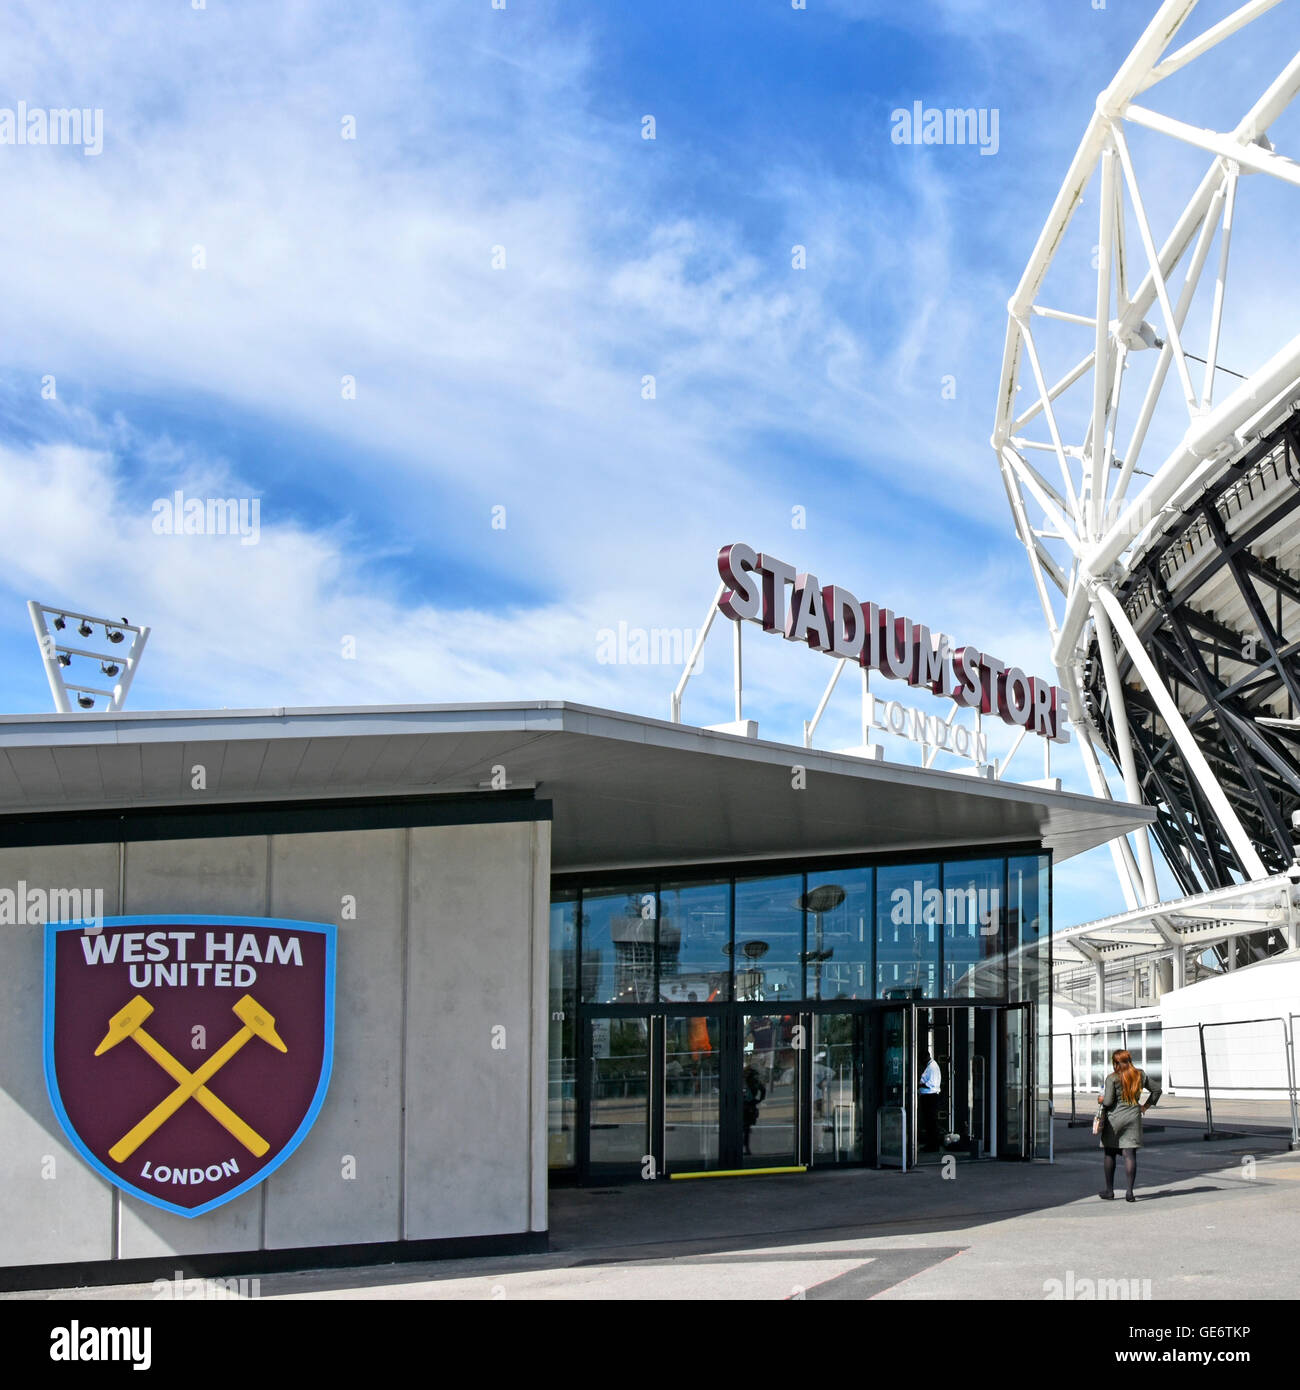 west-ham-united-logo-on-new-london-stadium-store-beside-the-converted-GE6TKP.jpg